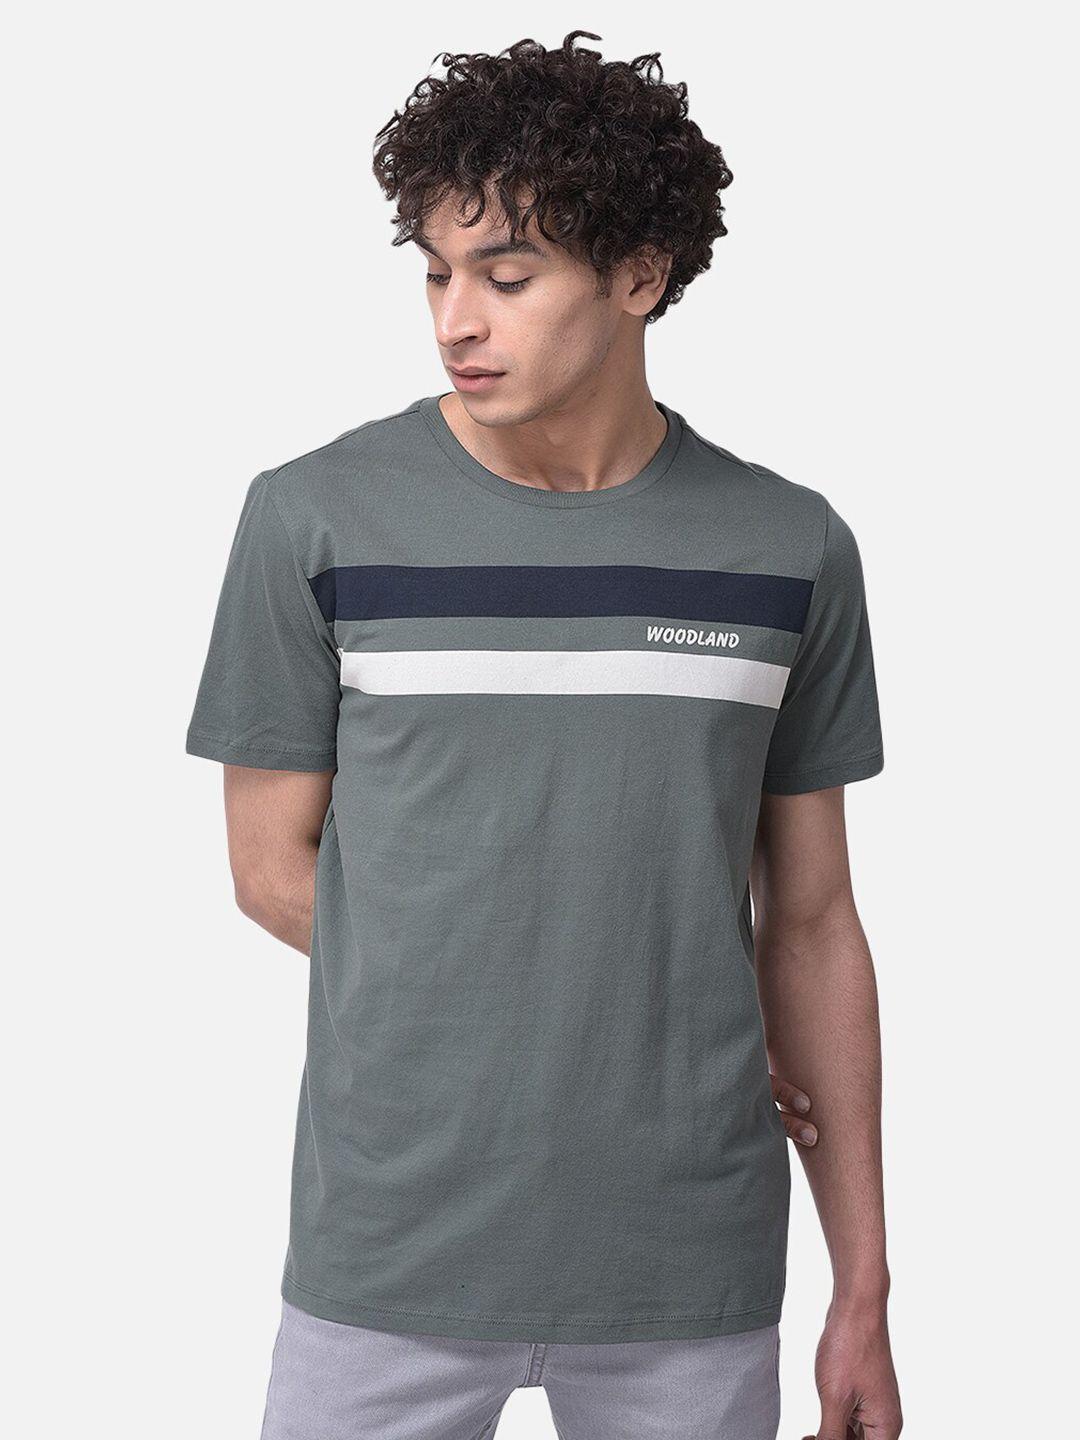 Woodland Men Cotton Grey & White Striped Printed T-shirt